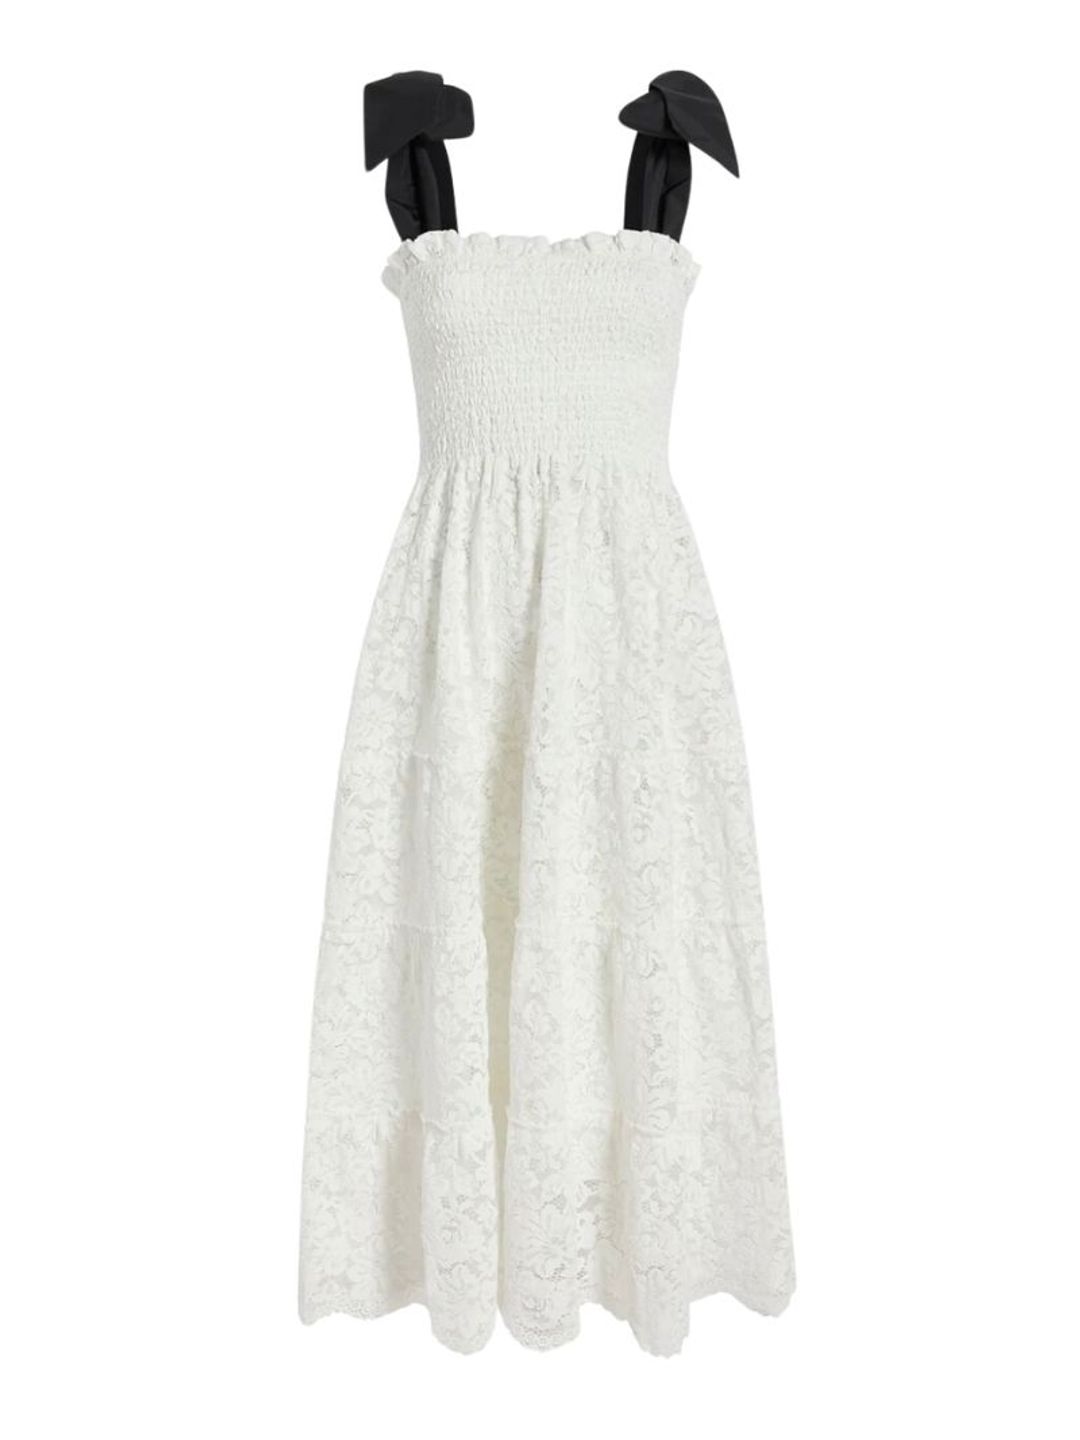 White dress with black bow straps 